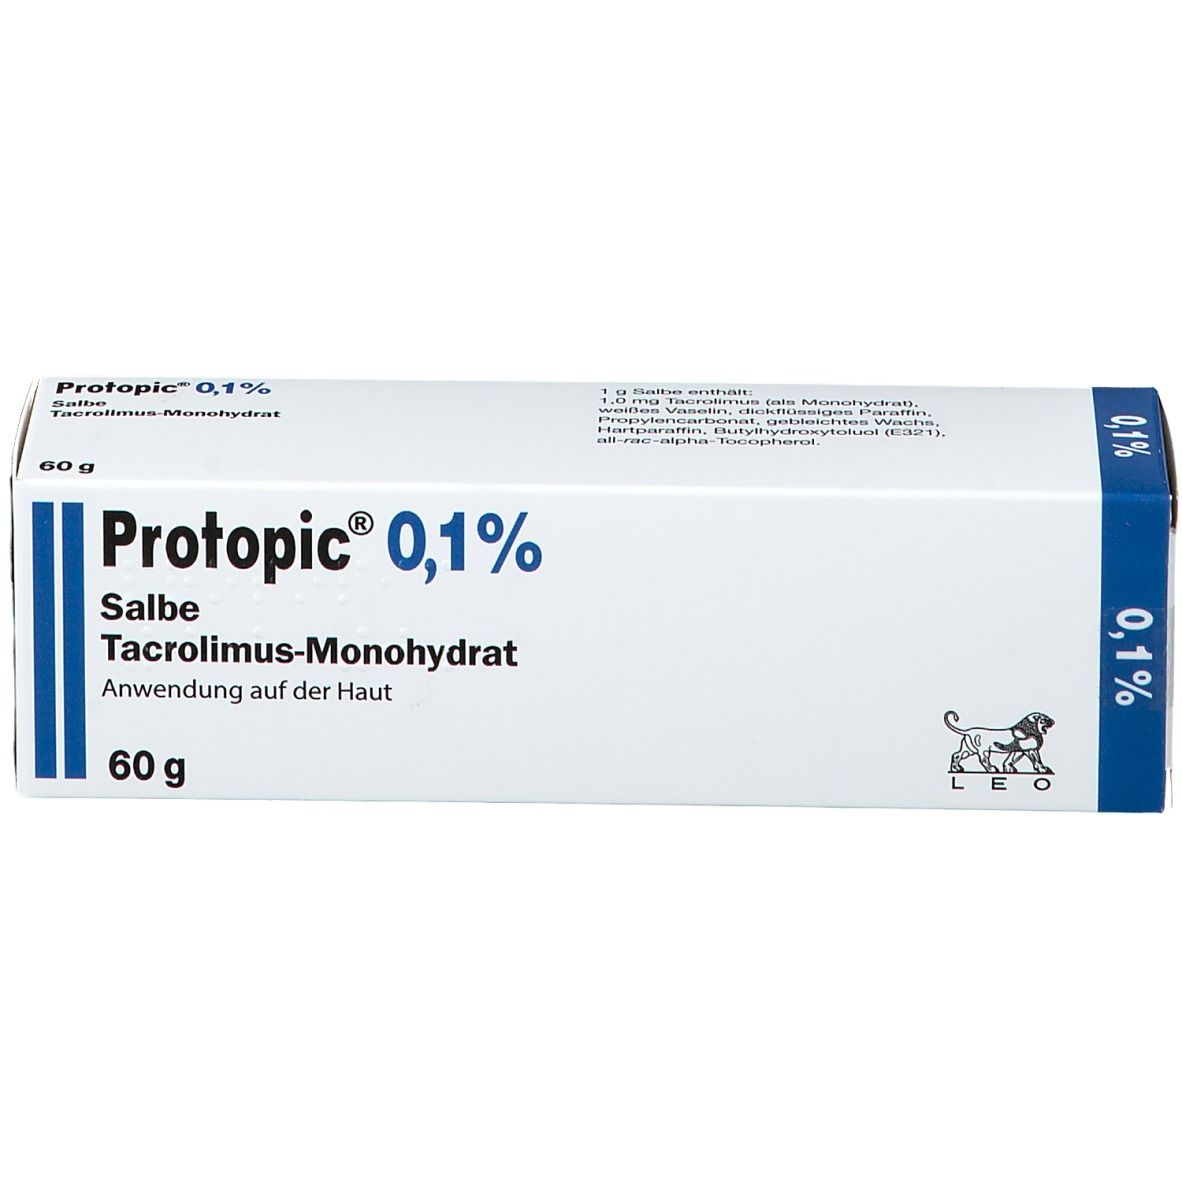 Protopic 0,1% Salbe